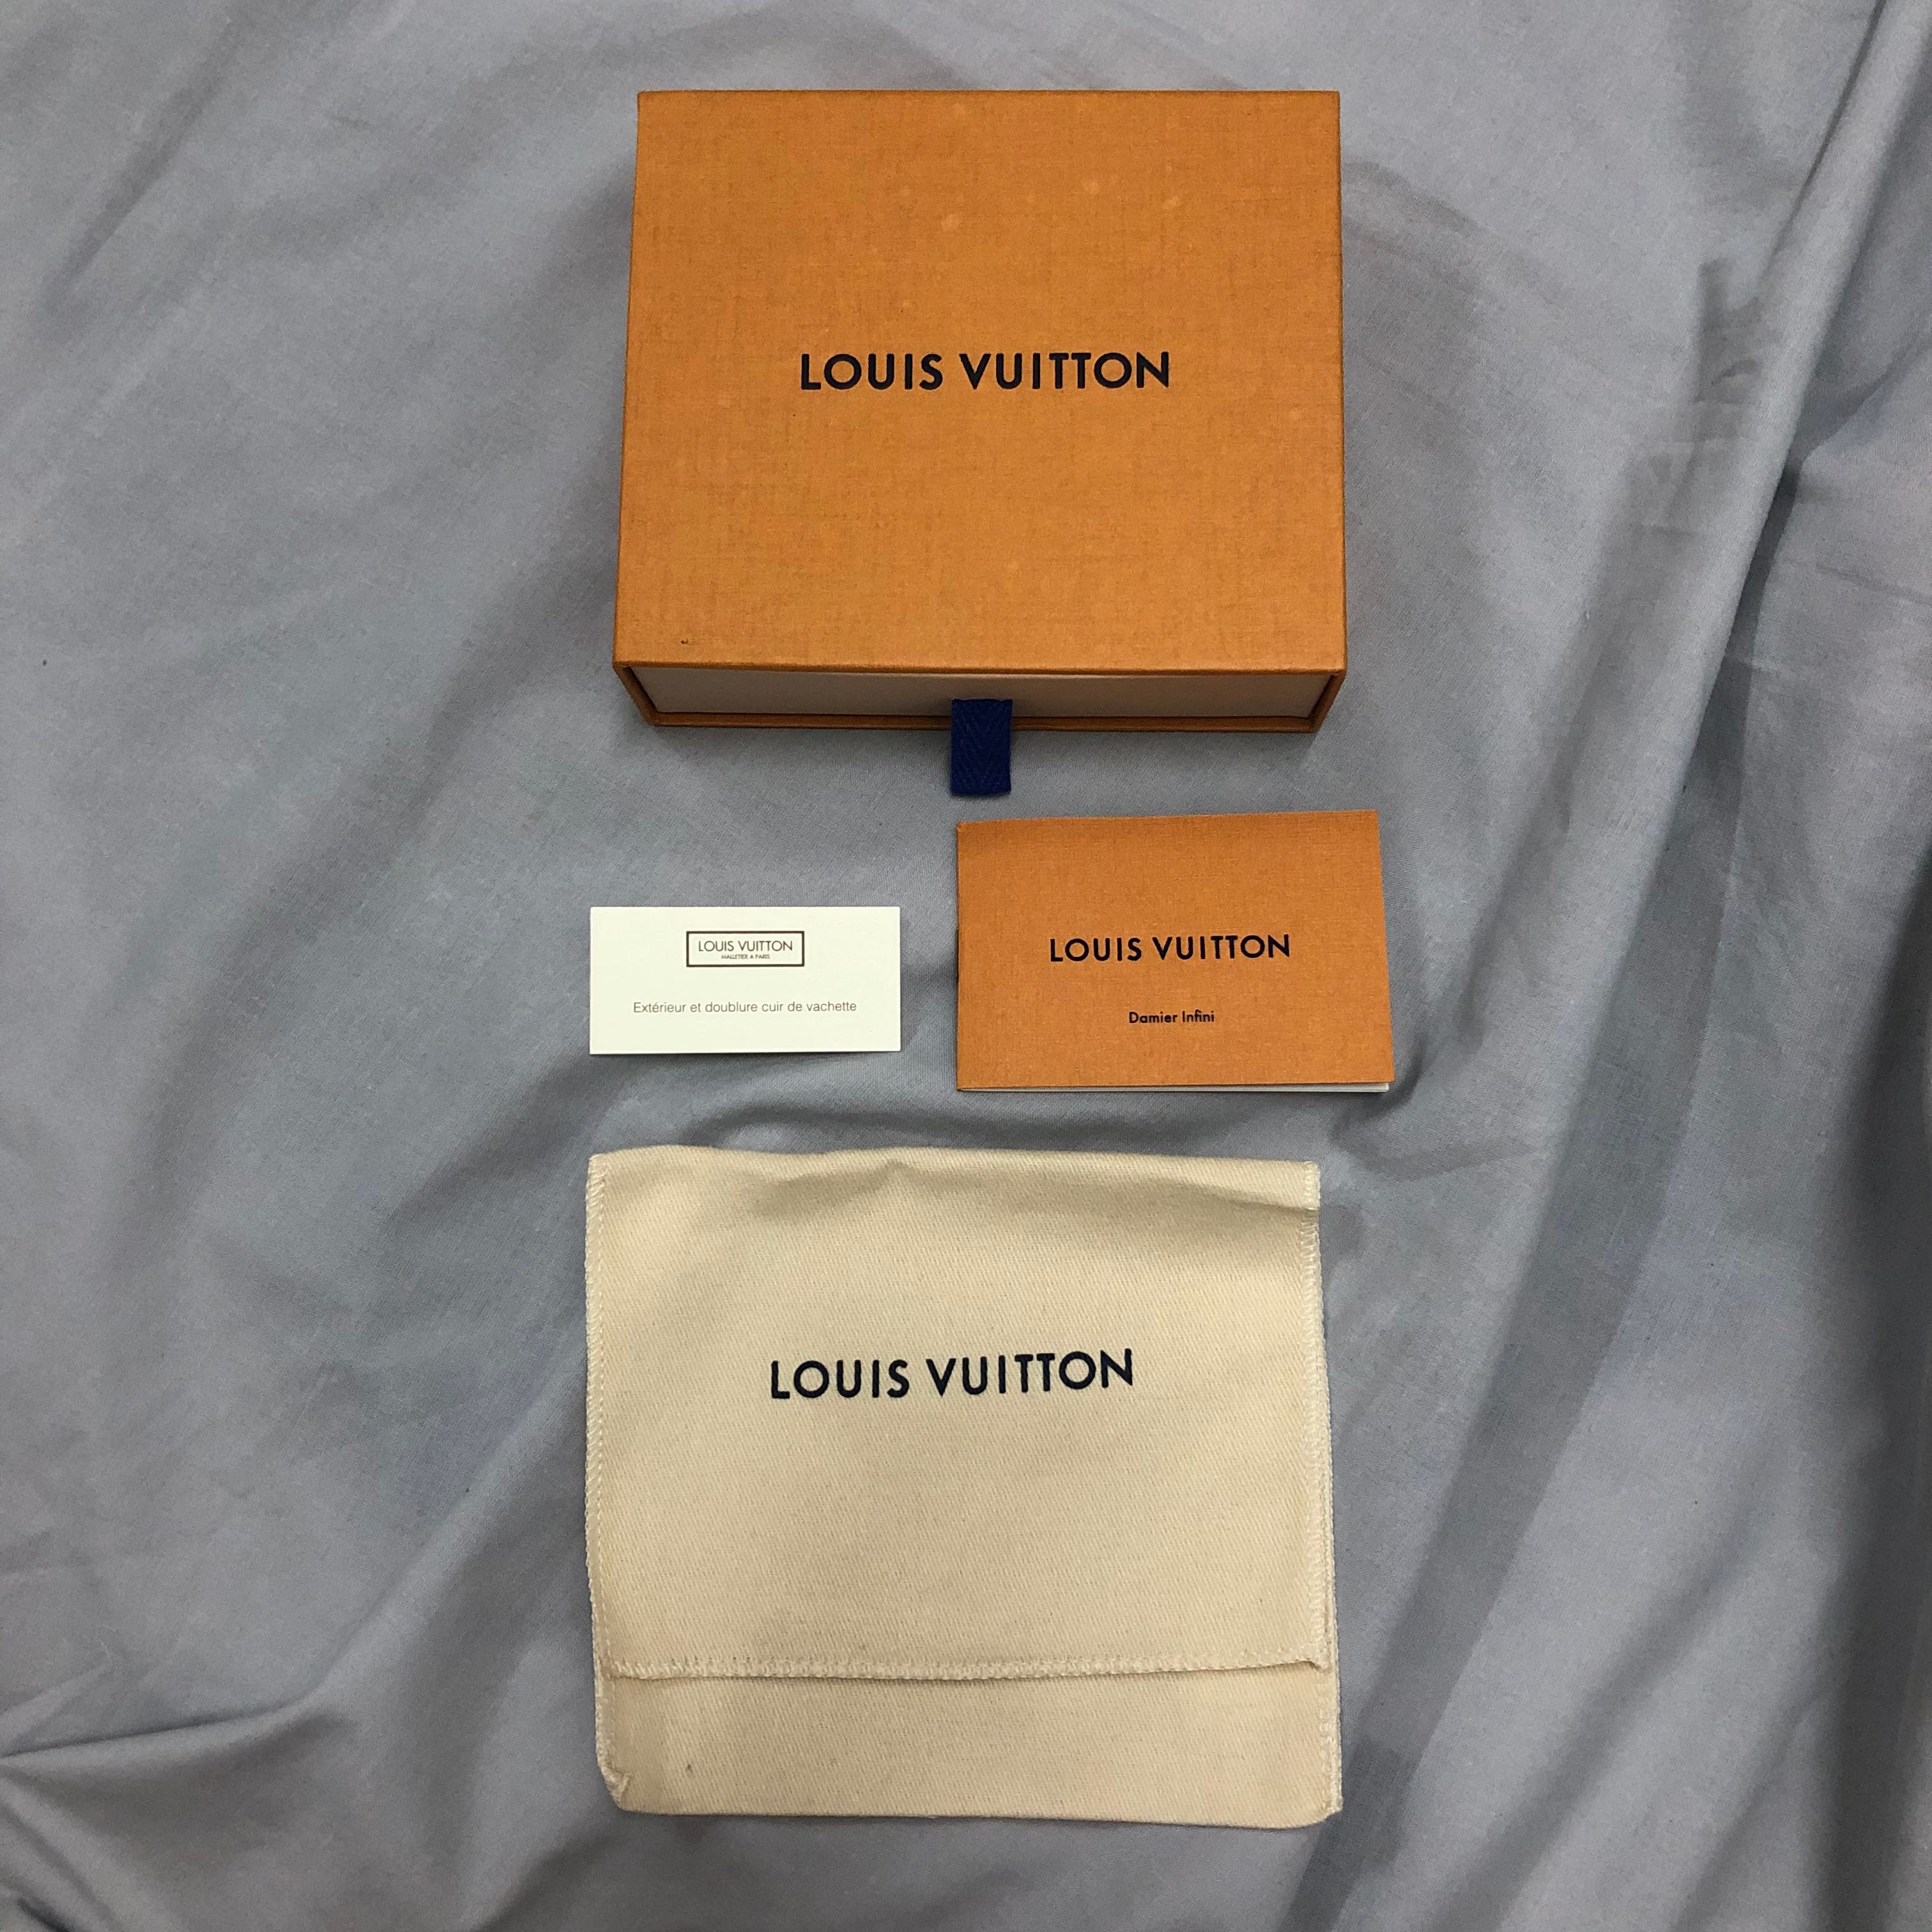 ORIGINAL LOUIS VUITTON WALLET DUST BAG AND BOX